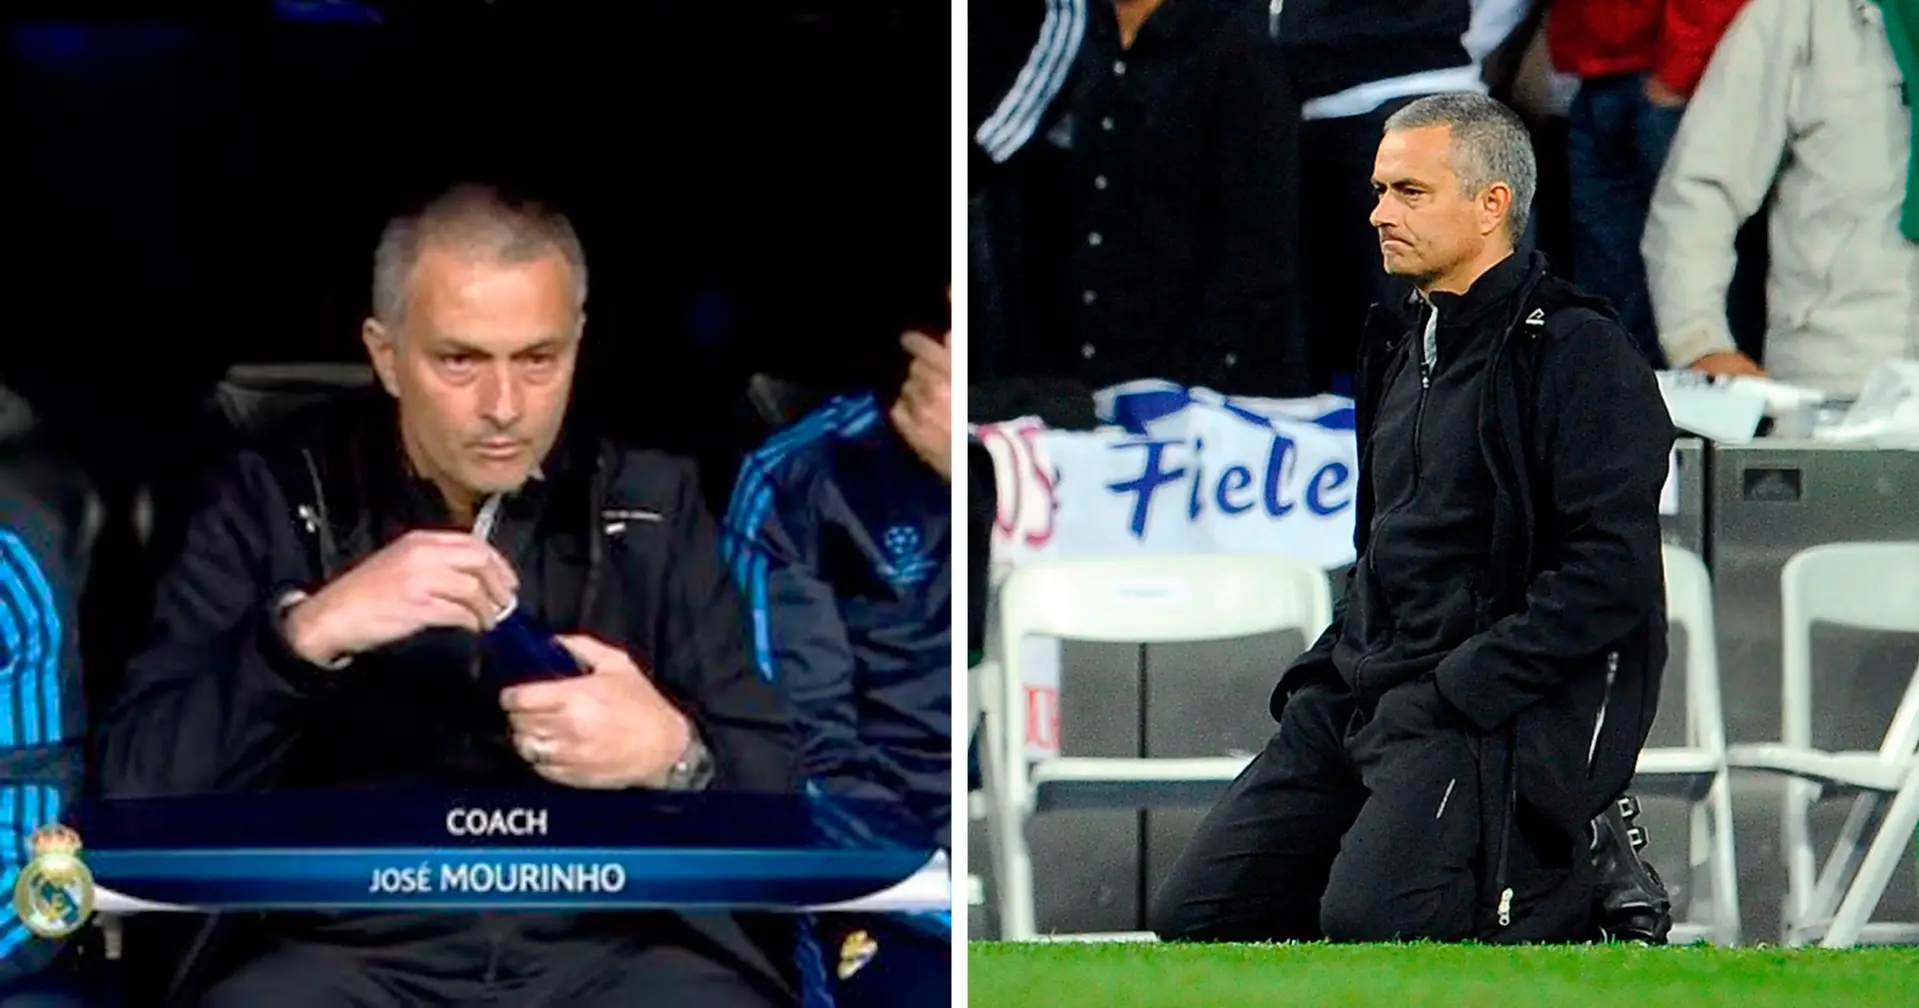 'La más dolorosa de mi carrera': Mourinho revela la única derrota que le hizo llorar